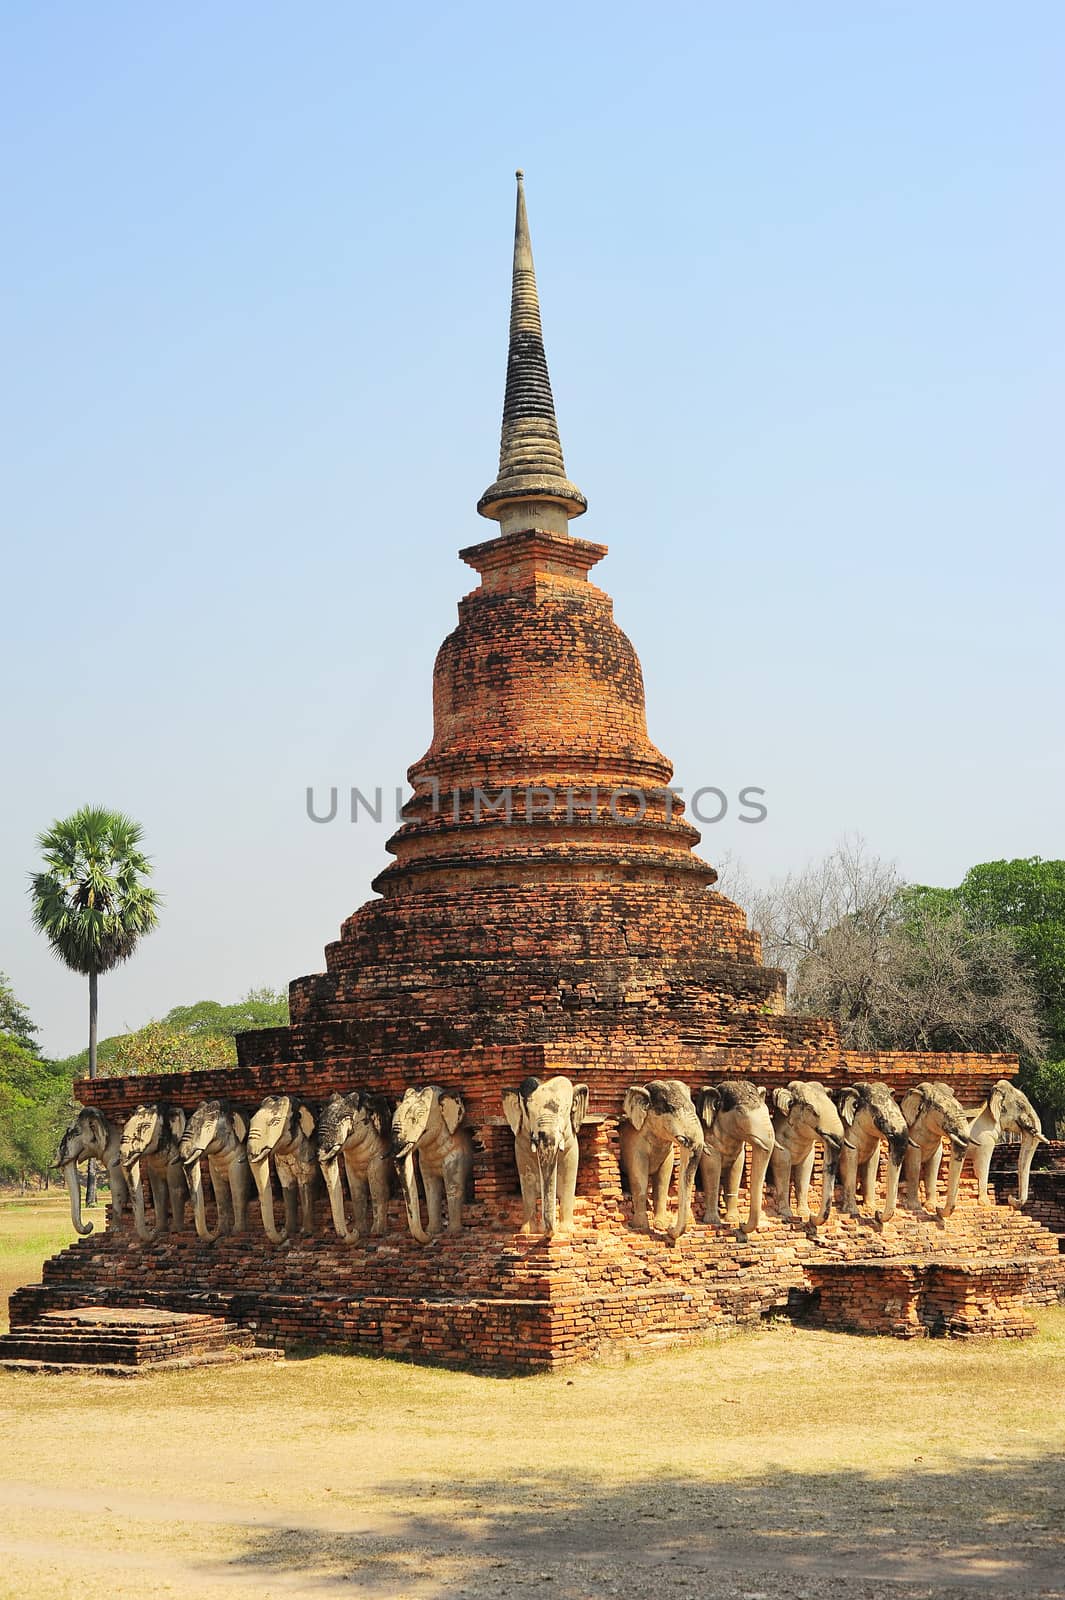 Elephants and brick pagoda in old Sukhothai, Thailand